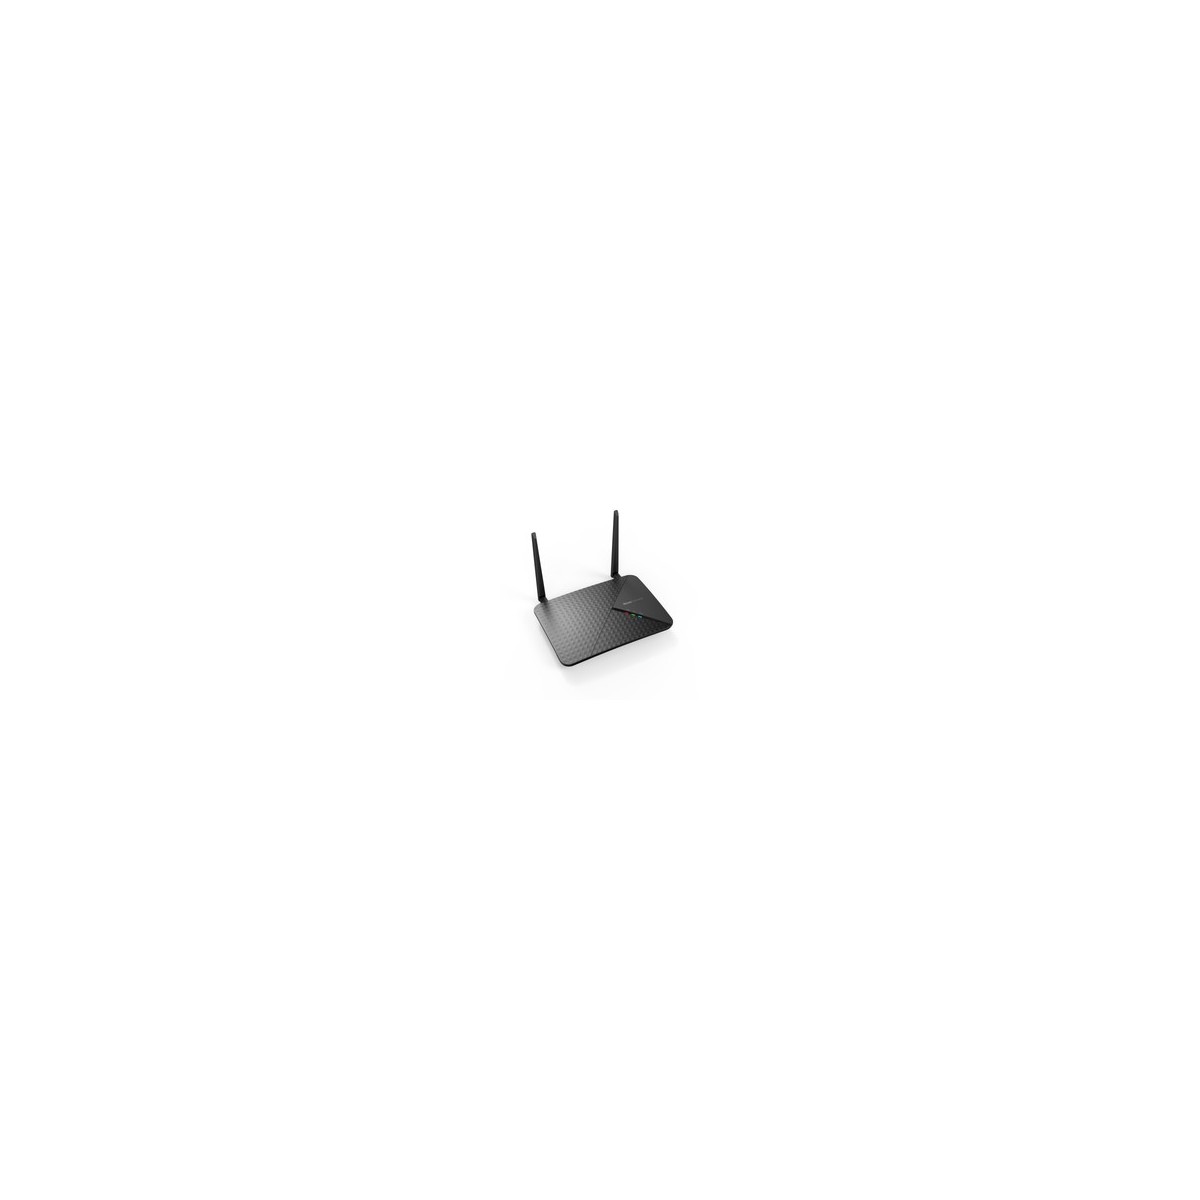 Vivitek NovoConnect X900 - Desktop - Black - Kensington - 1280 x 720 (HD 720),1920 x 1080 (HD 1080),3840 x 2160 - 720p,1080p - 1